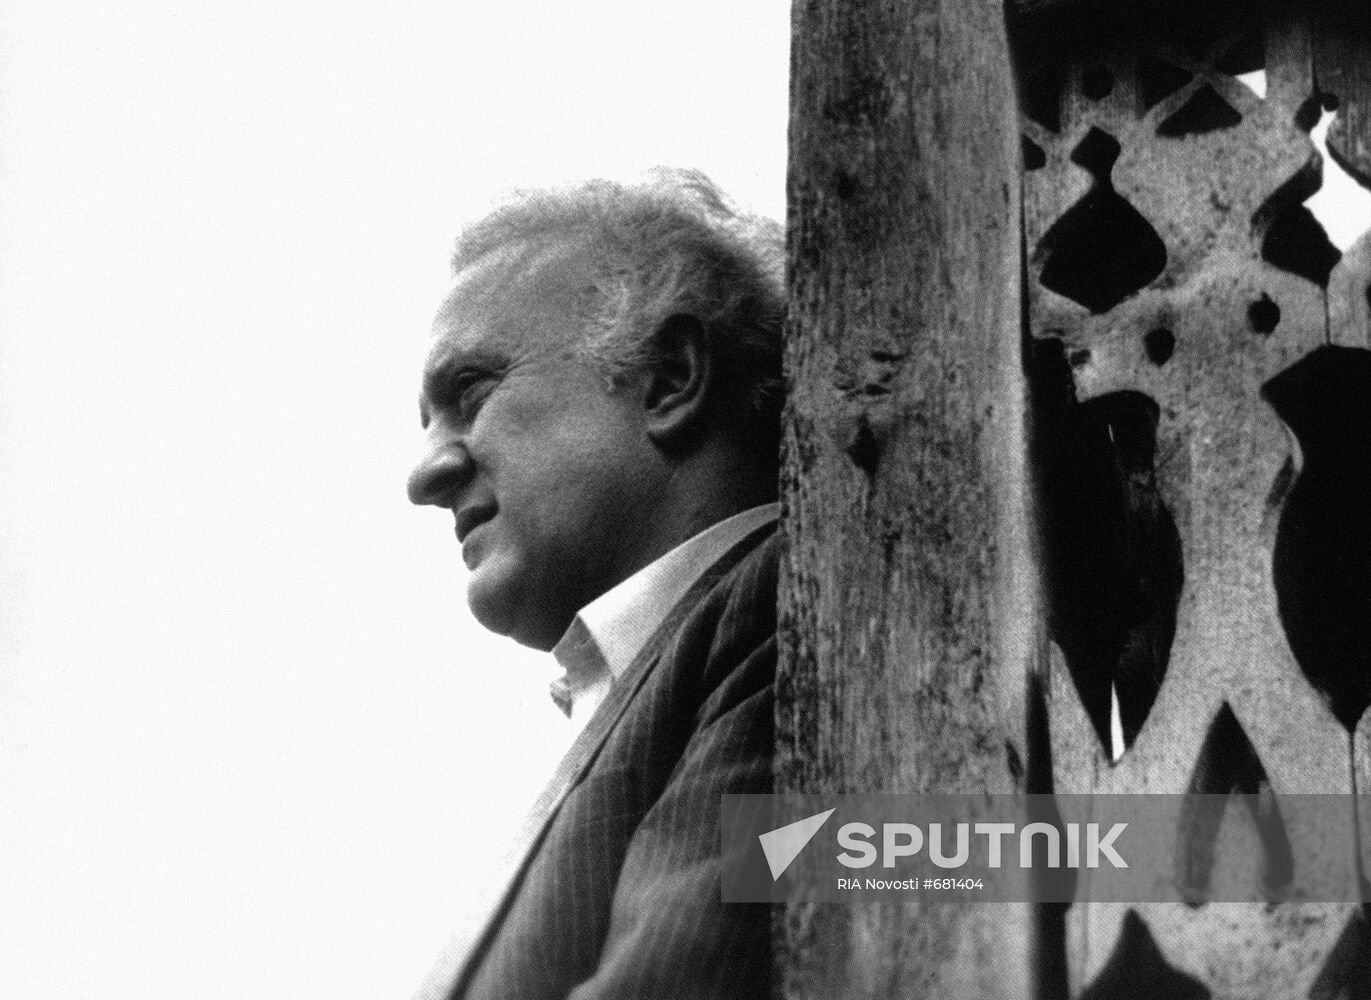 Soviet and Georgian politician Eduard Shevardnadze